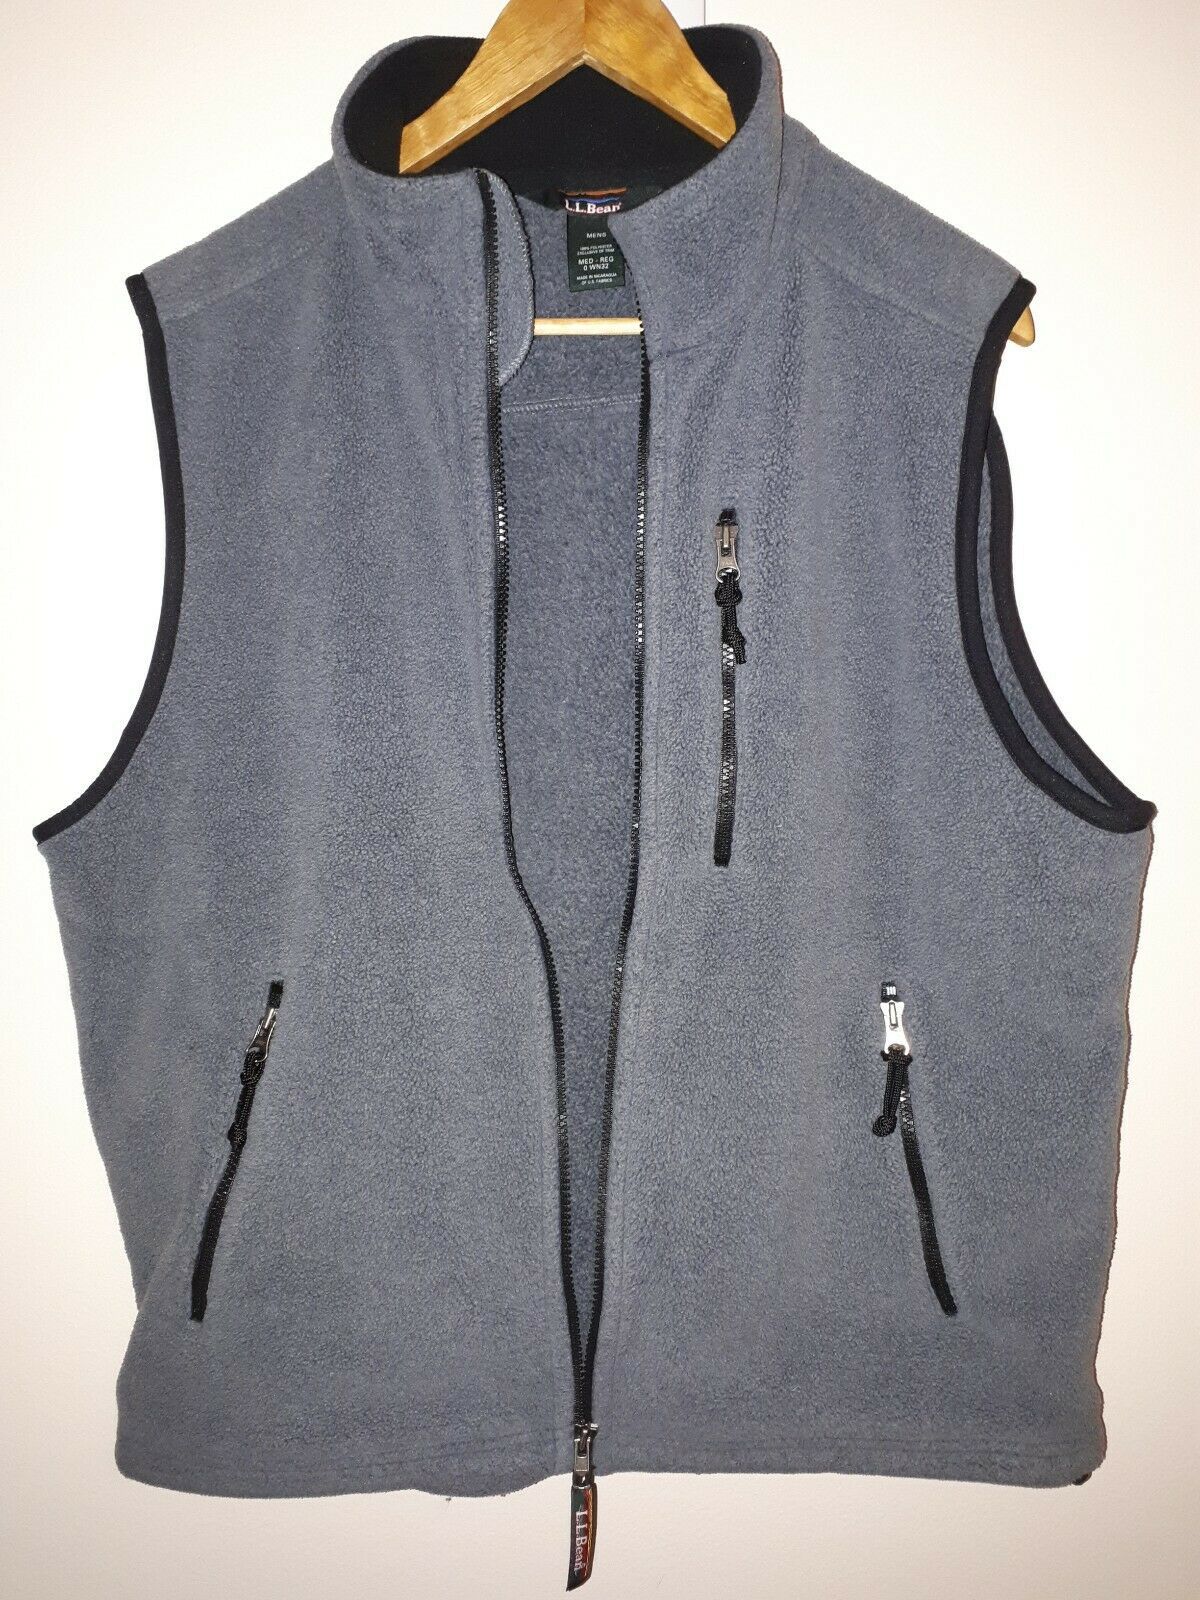 Men's LL Bean OUTDOORS Gray Fleece Vest Size Medium Model # 0 WN32